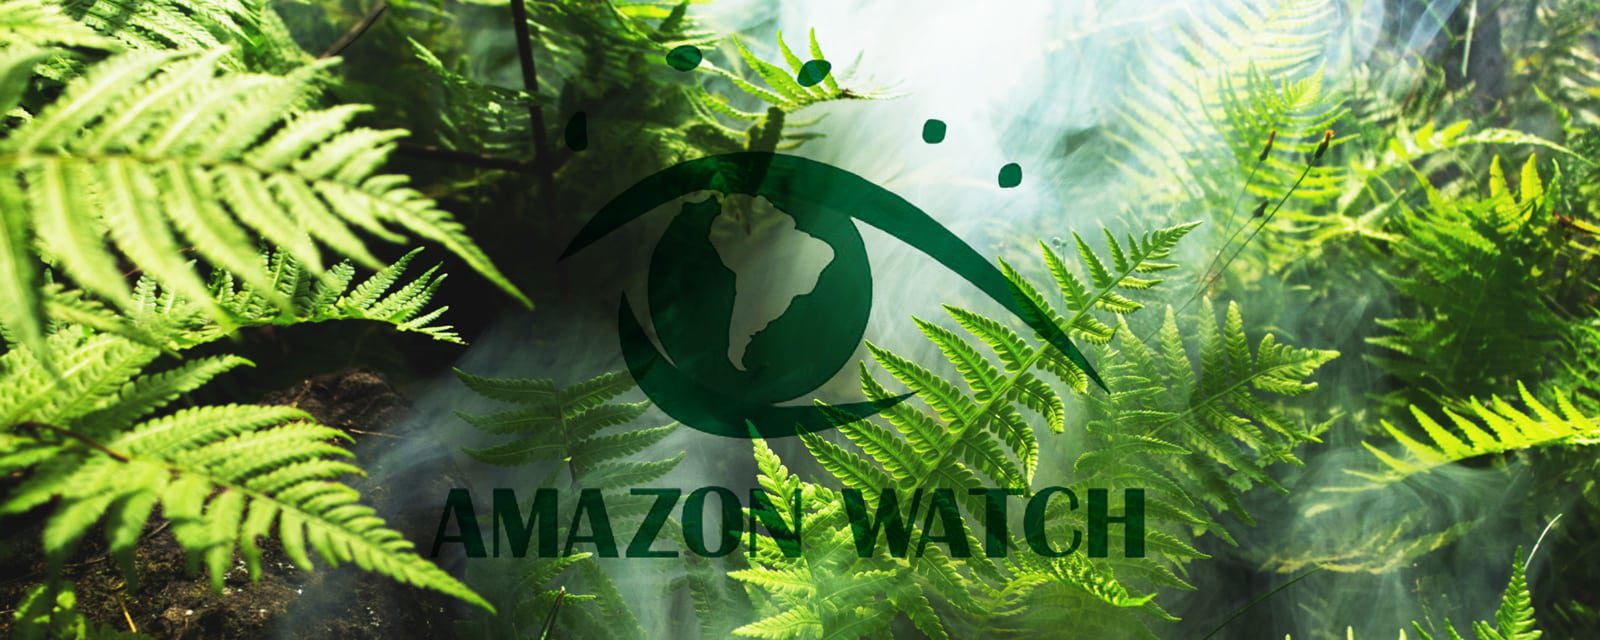 amazon watch